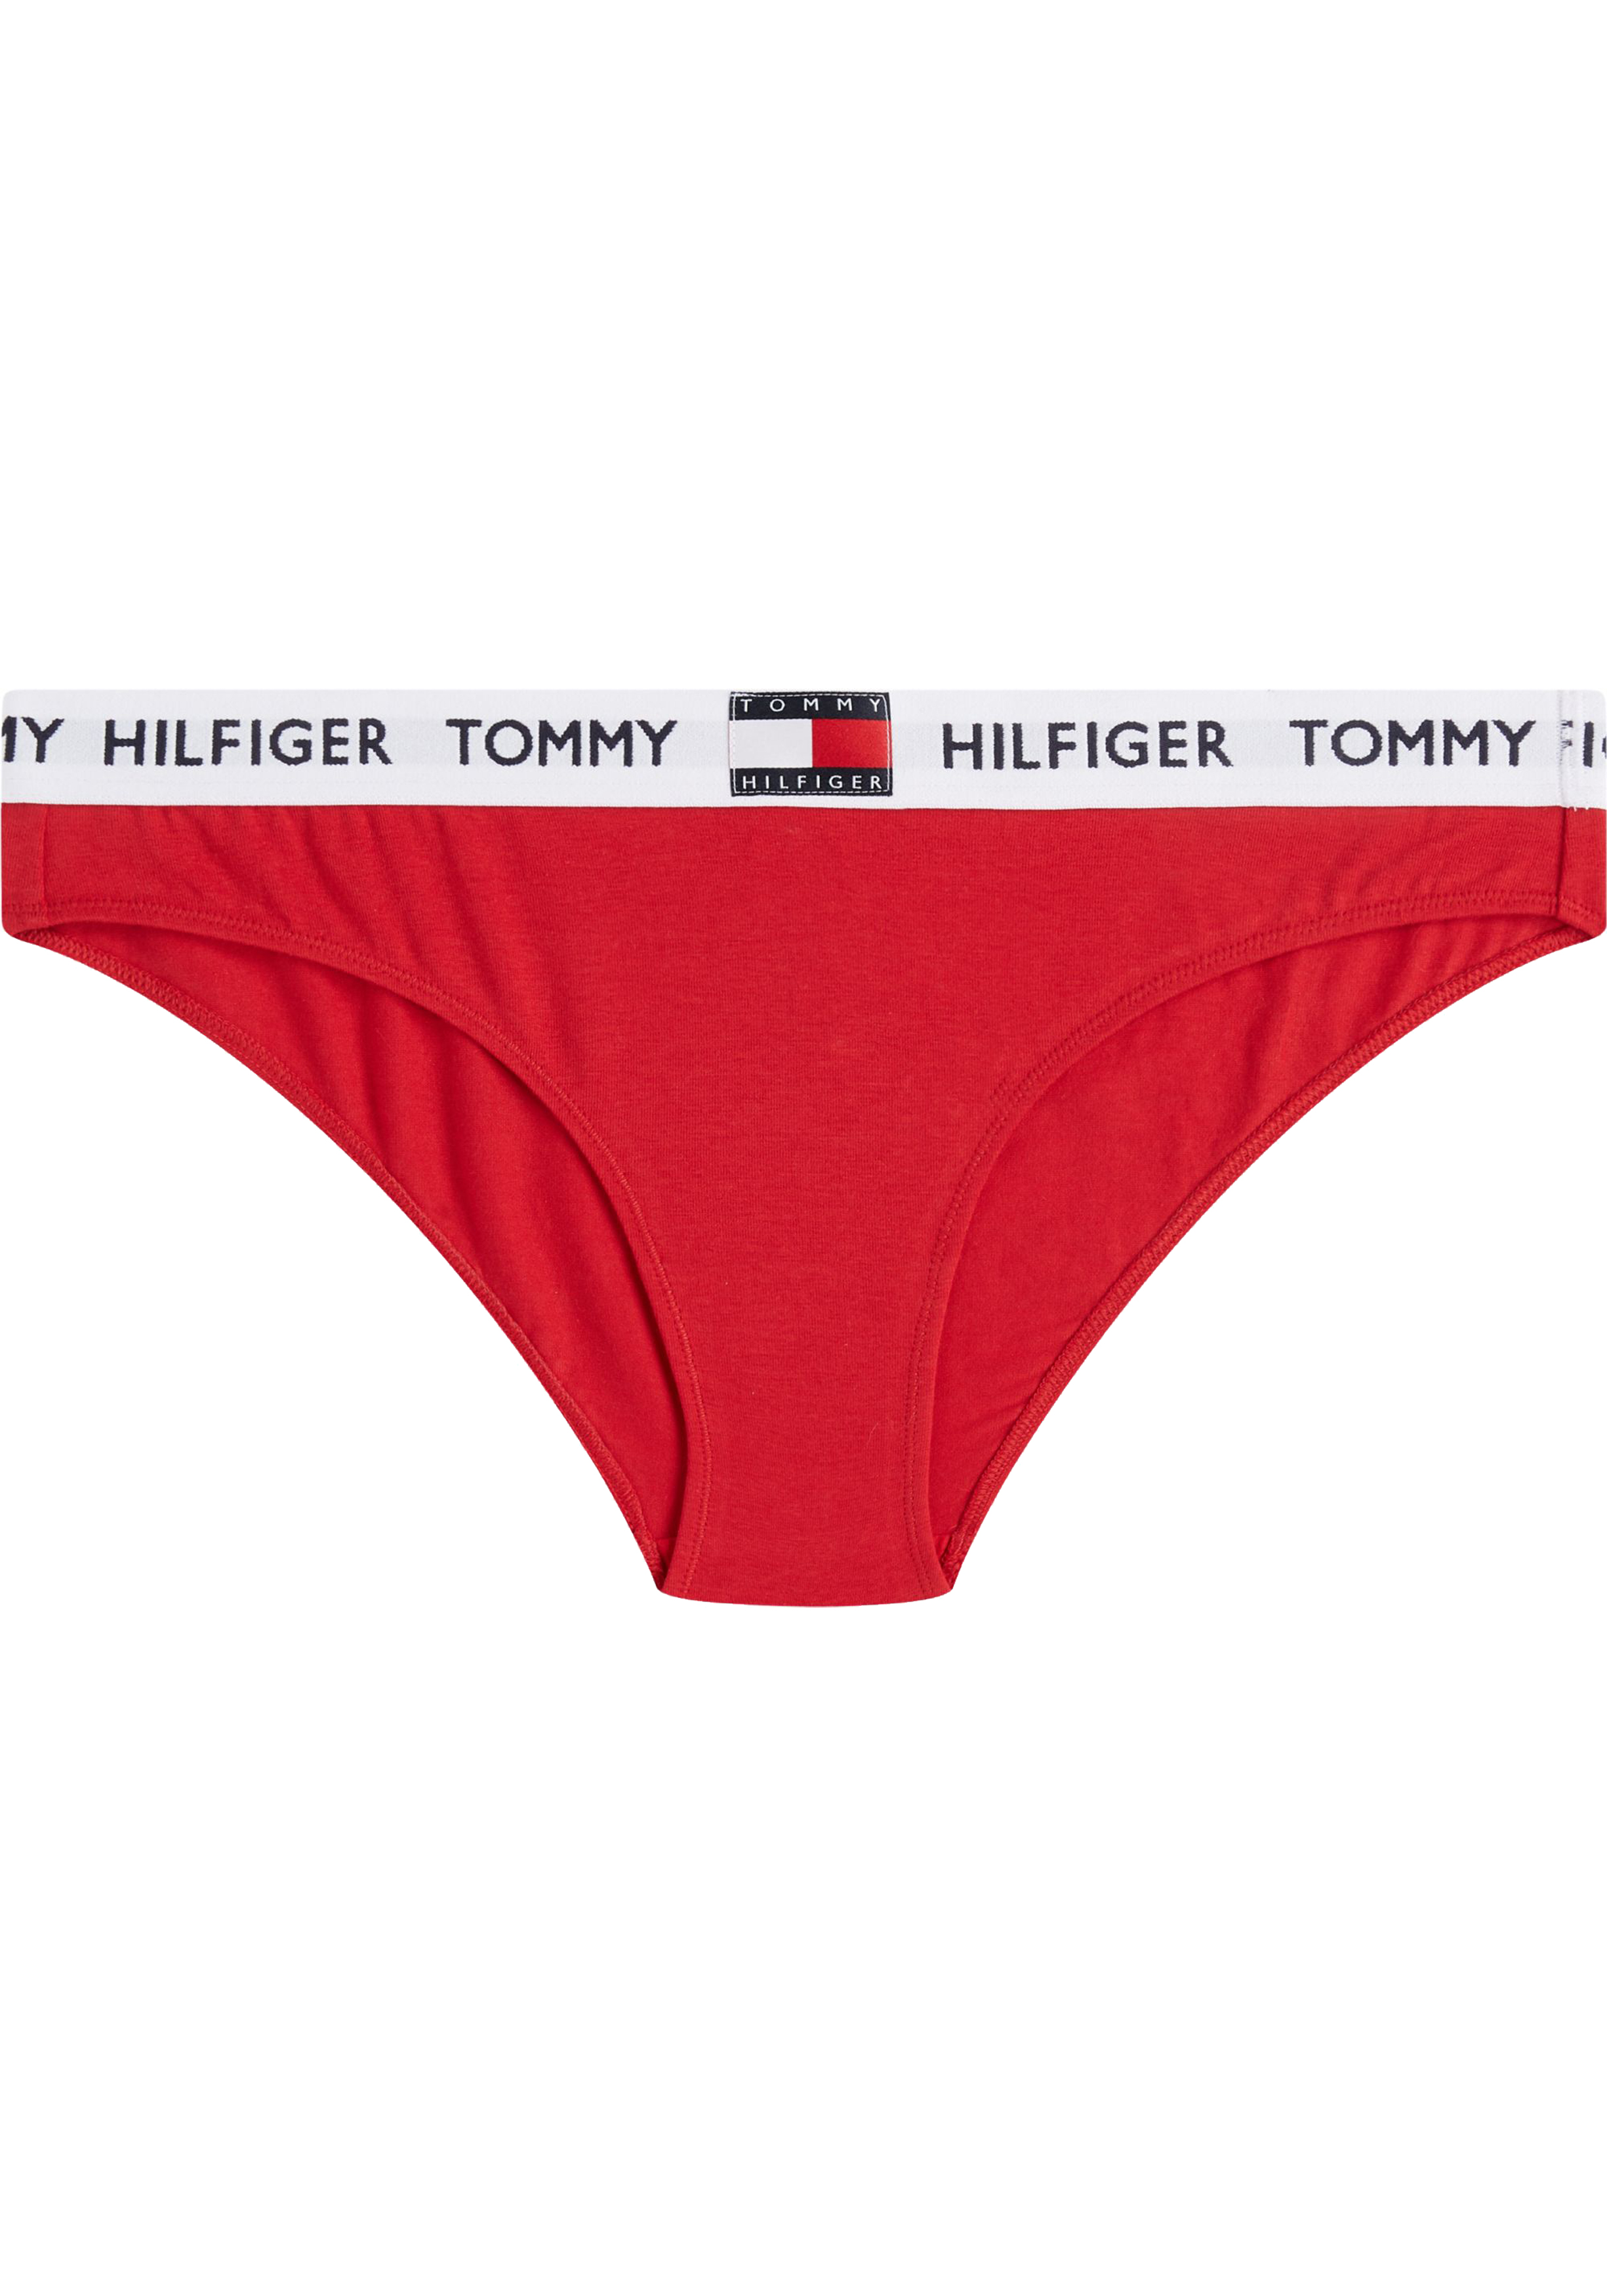 Hilfiger kortingen dames tot 85 Tommy slip (1-pack), rood 50% - SALE Tommy met bikini